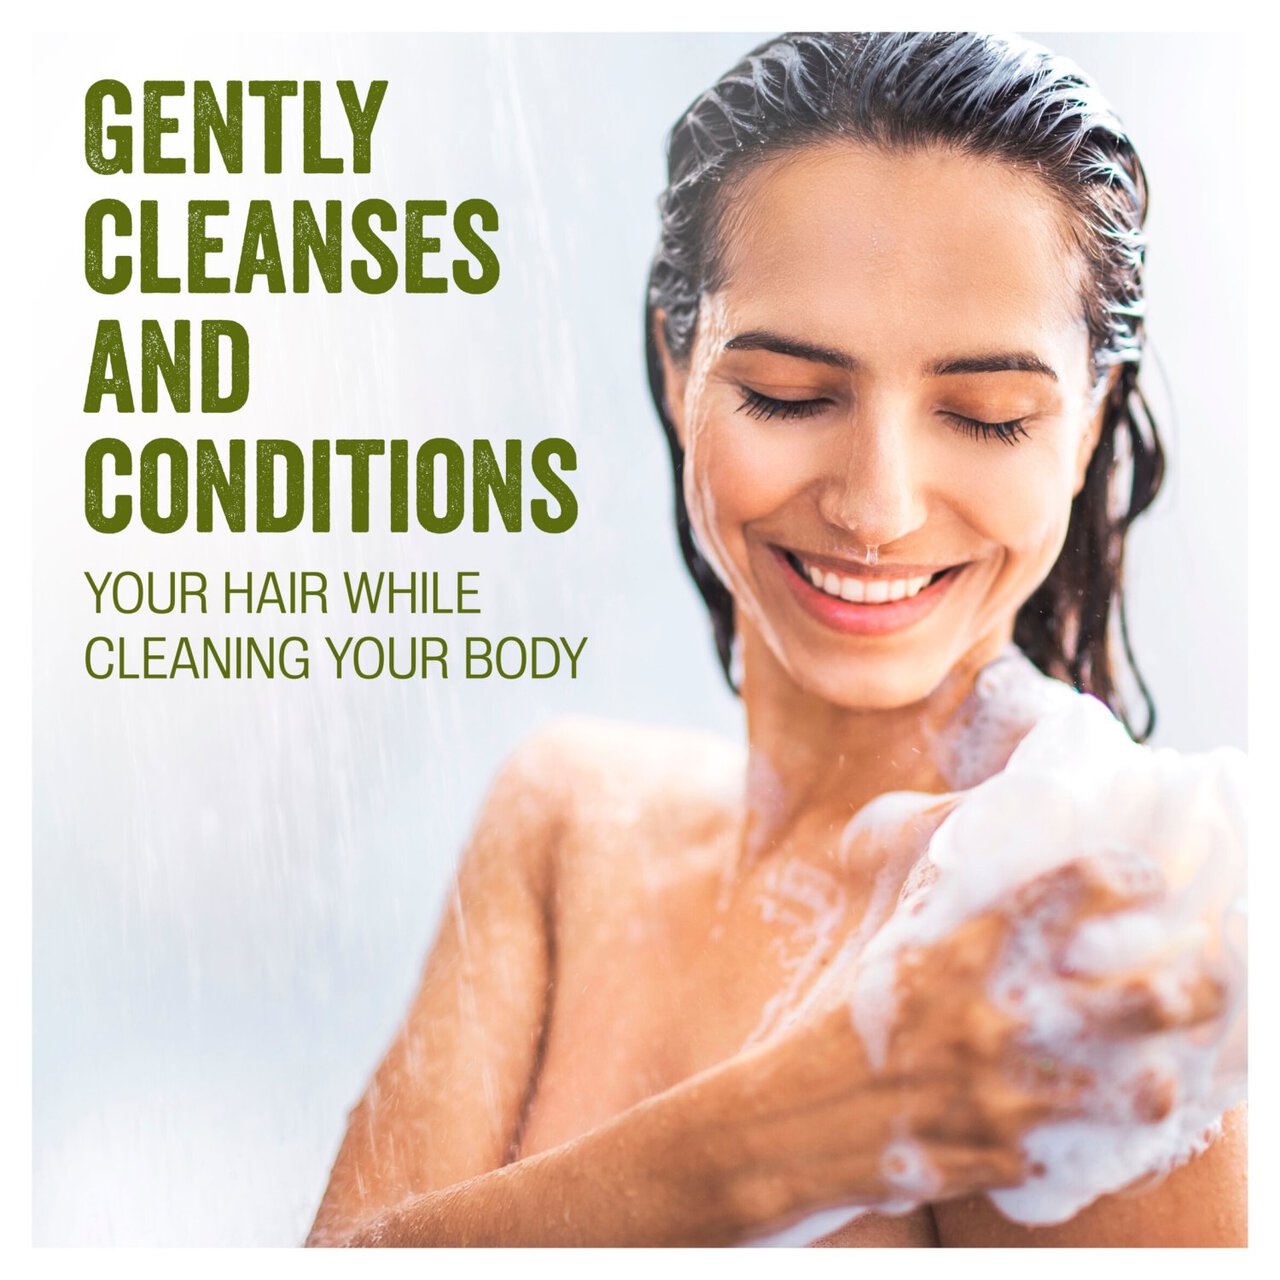 Badedas 3 in 1 Revitalising Shower Gel, Shampoo & Conditioner 200ml